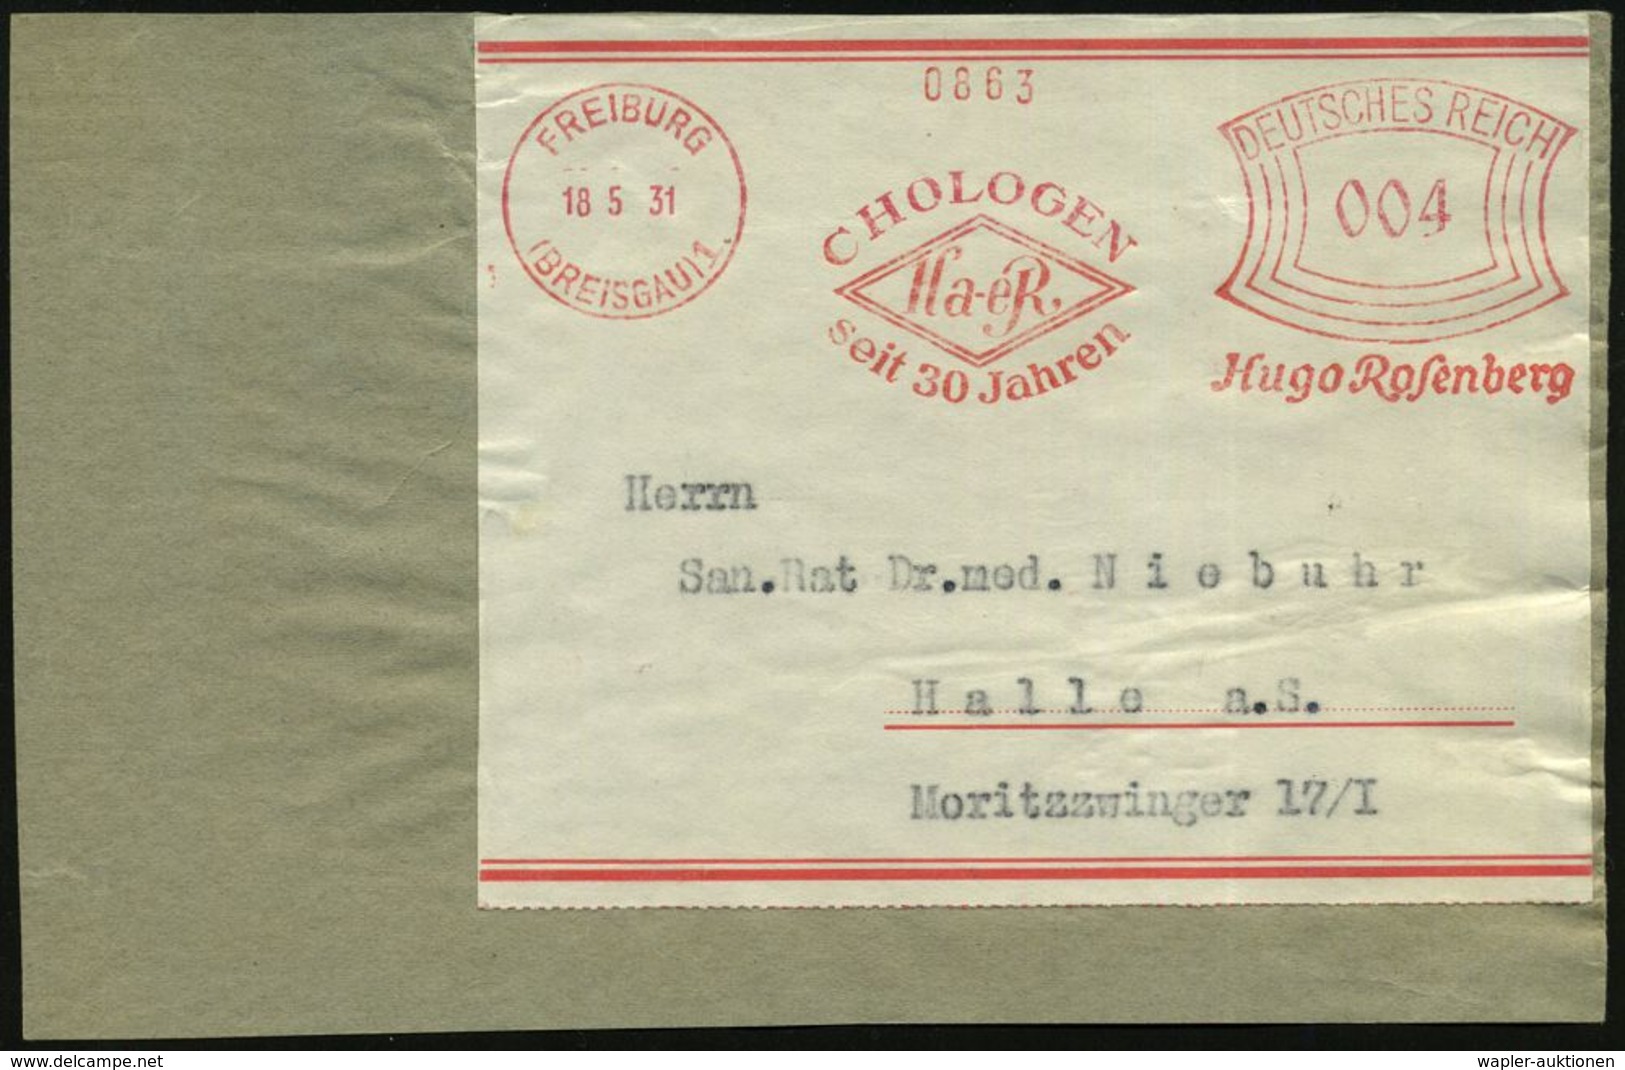 FREIBURG/ (BREISGAU)1/ CHOLOGEN/ Ha-eR/ Seit 30 Jahren/ Hugo Rosenberg 1931 (18.5.) AFS 004 Pf. Klar Auf Adreß-Aufkleber - Farmacia